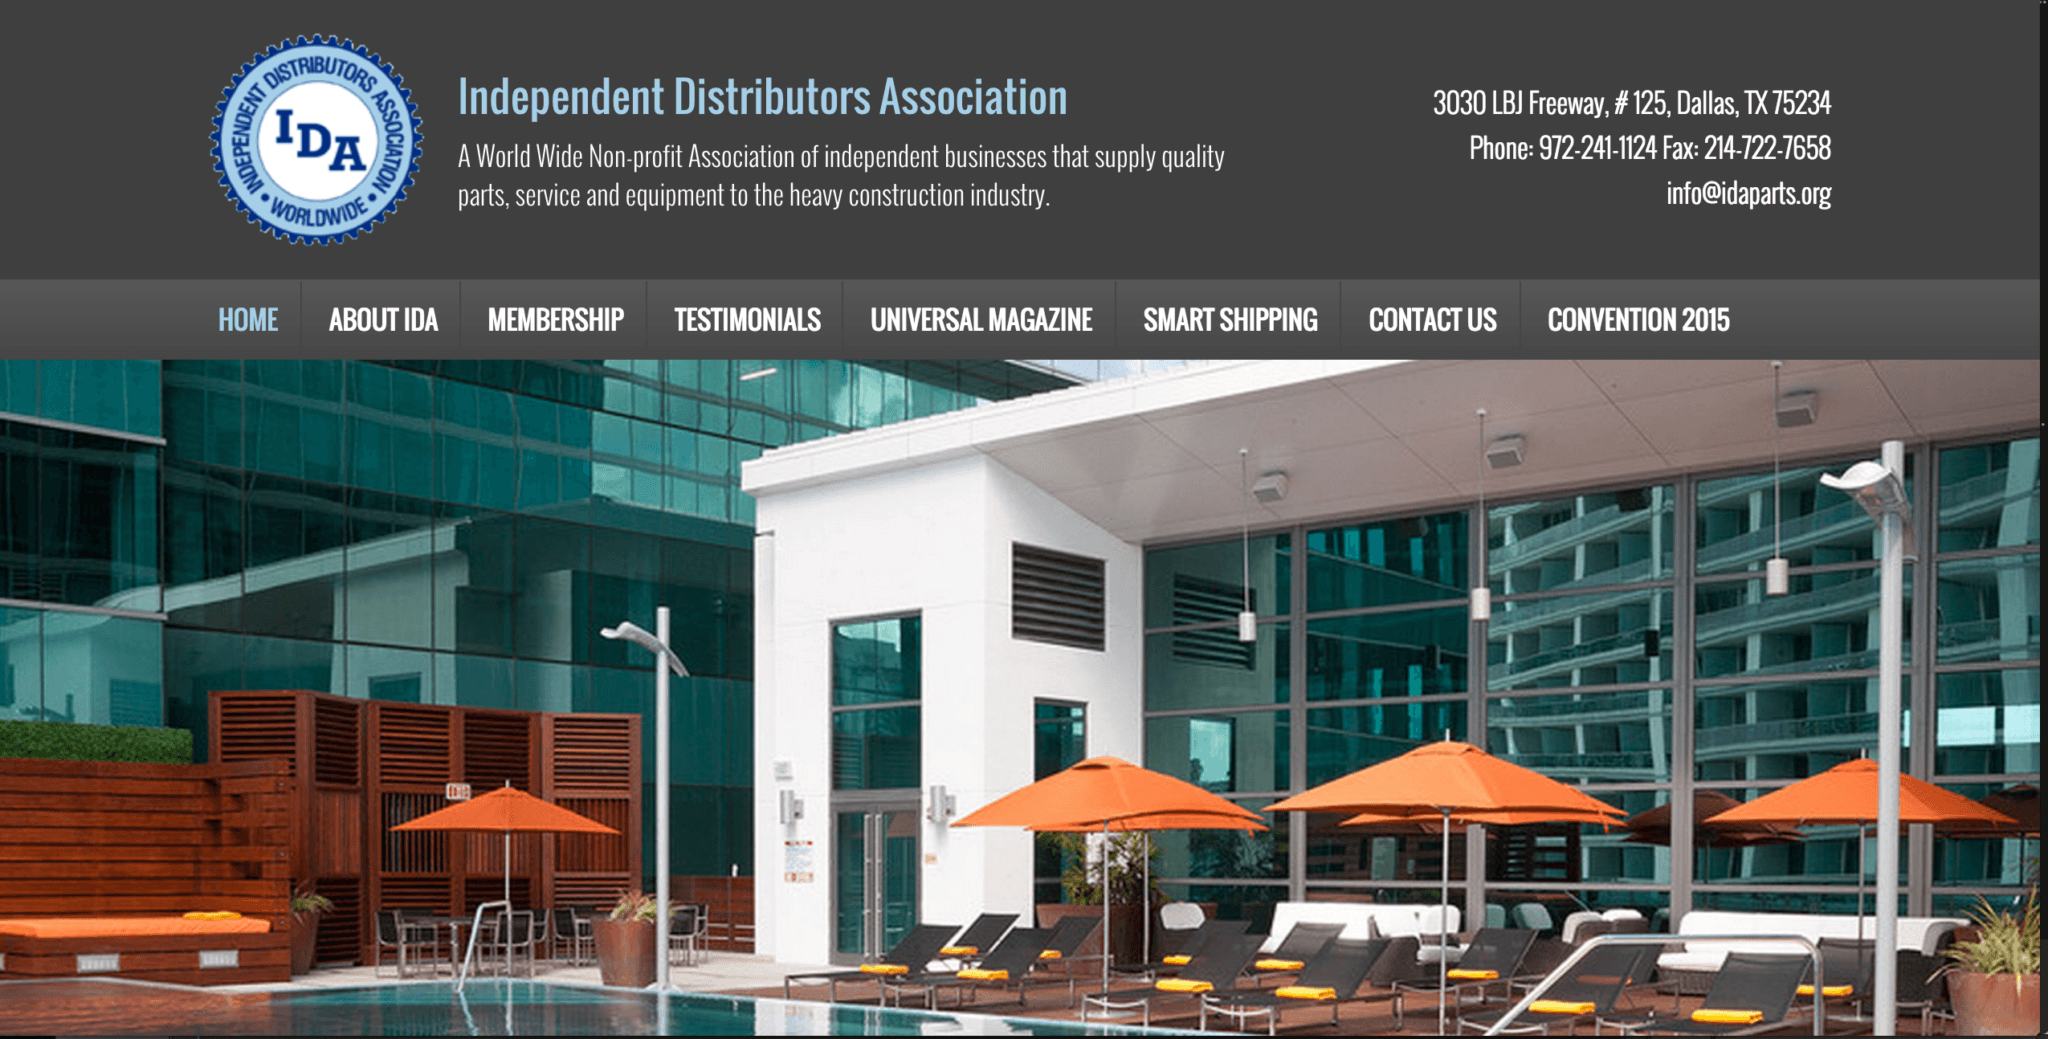 Independent Distributors Association – Dallas TX Website Design